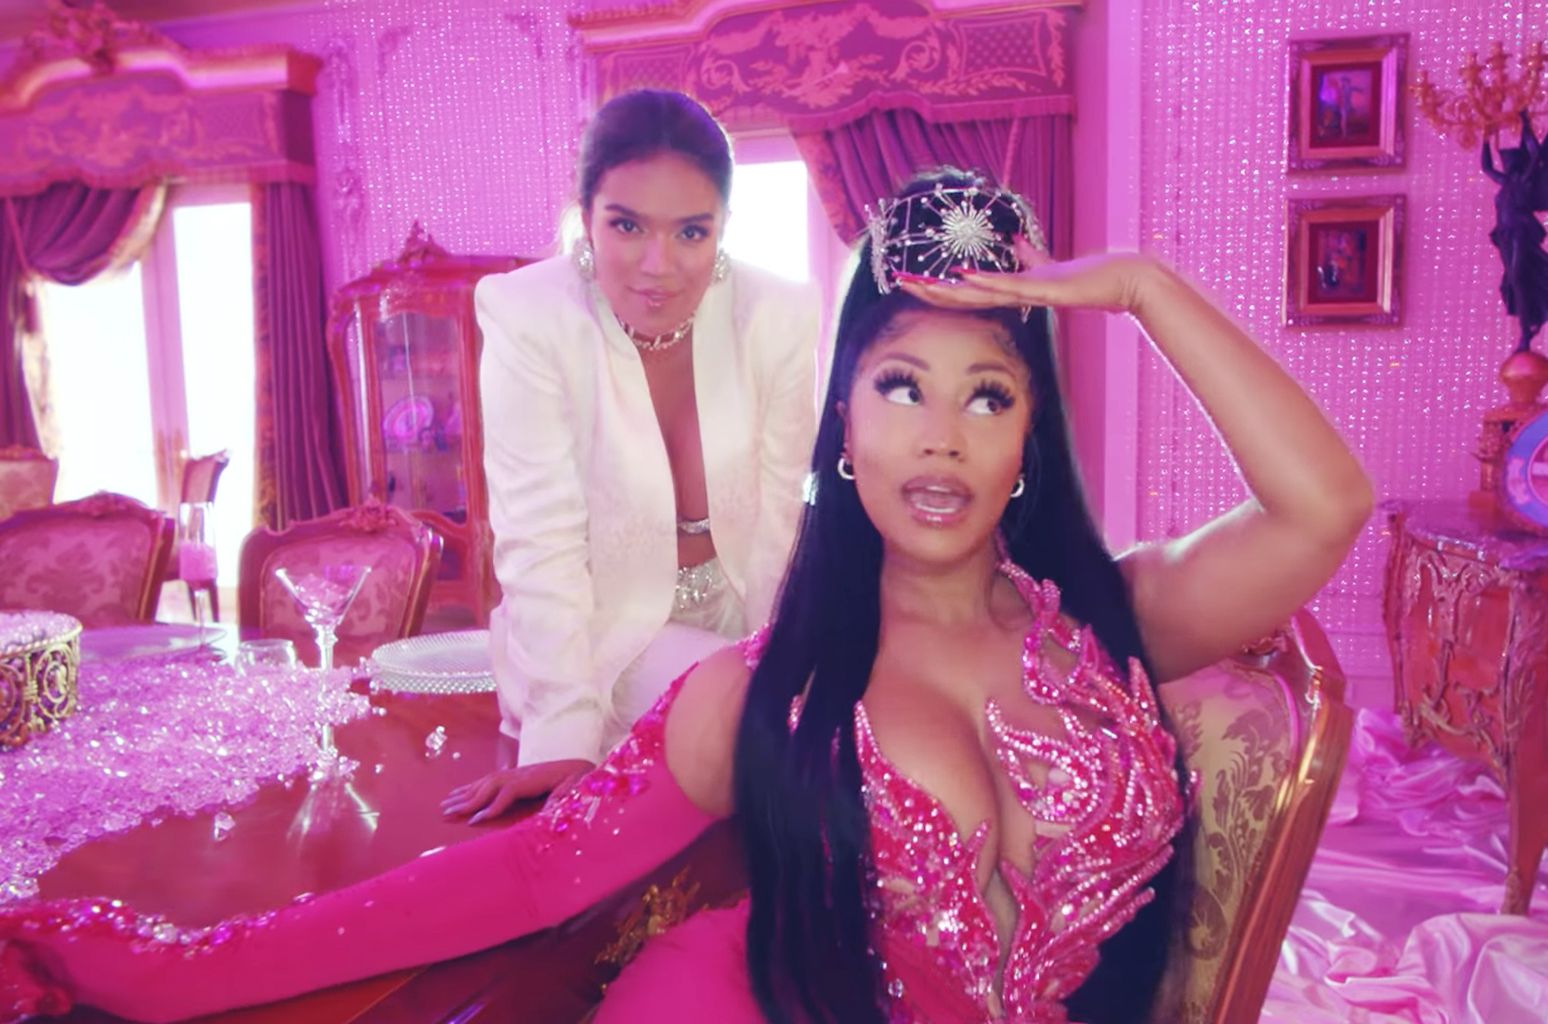 Karol G & Nicki Minaj's 'Tusa' Hits No. 1 on Latin Airplay Chart